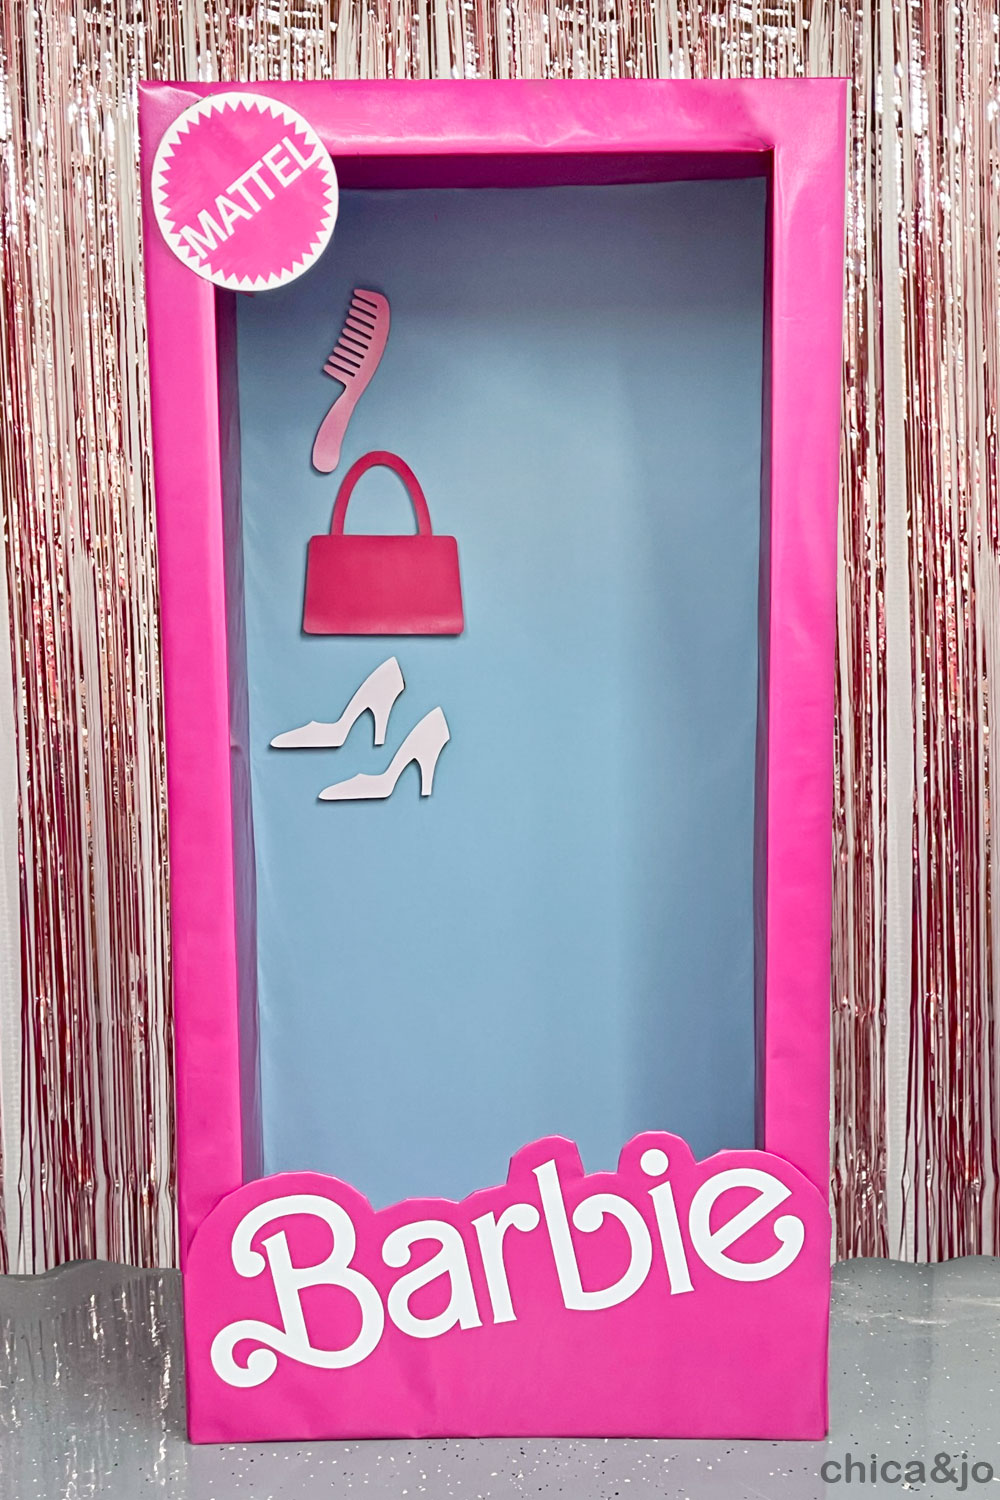 Life size barbie box photo box -  Italia